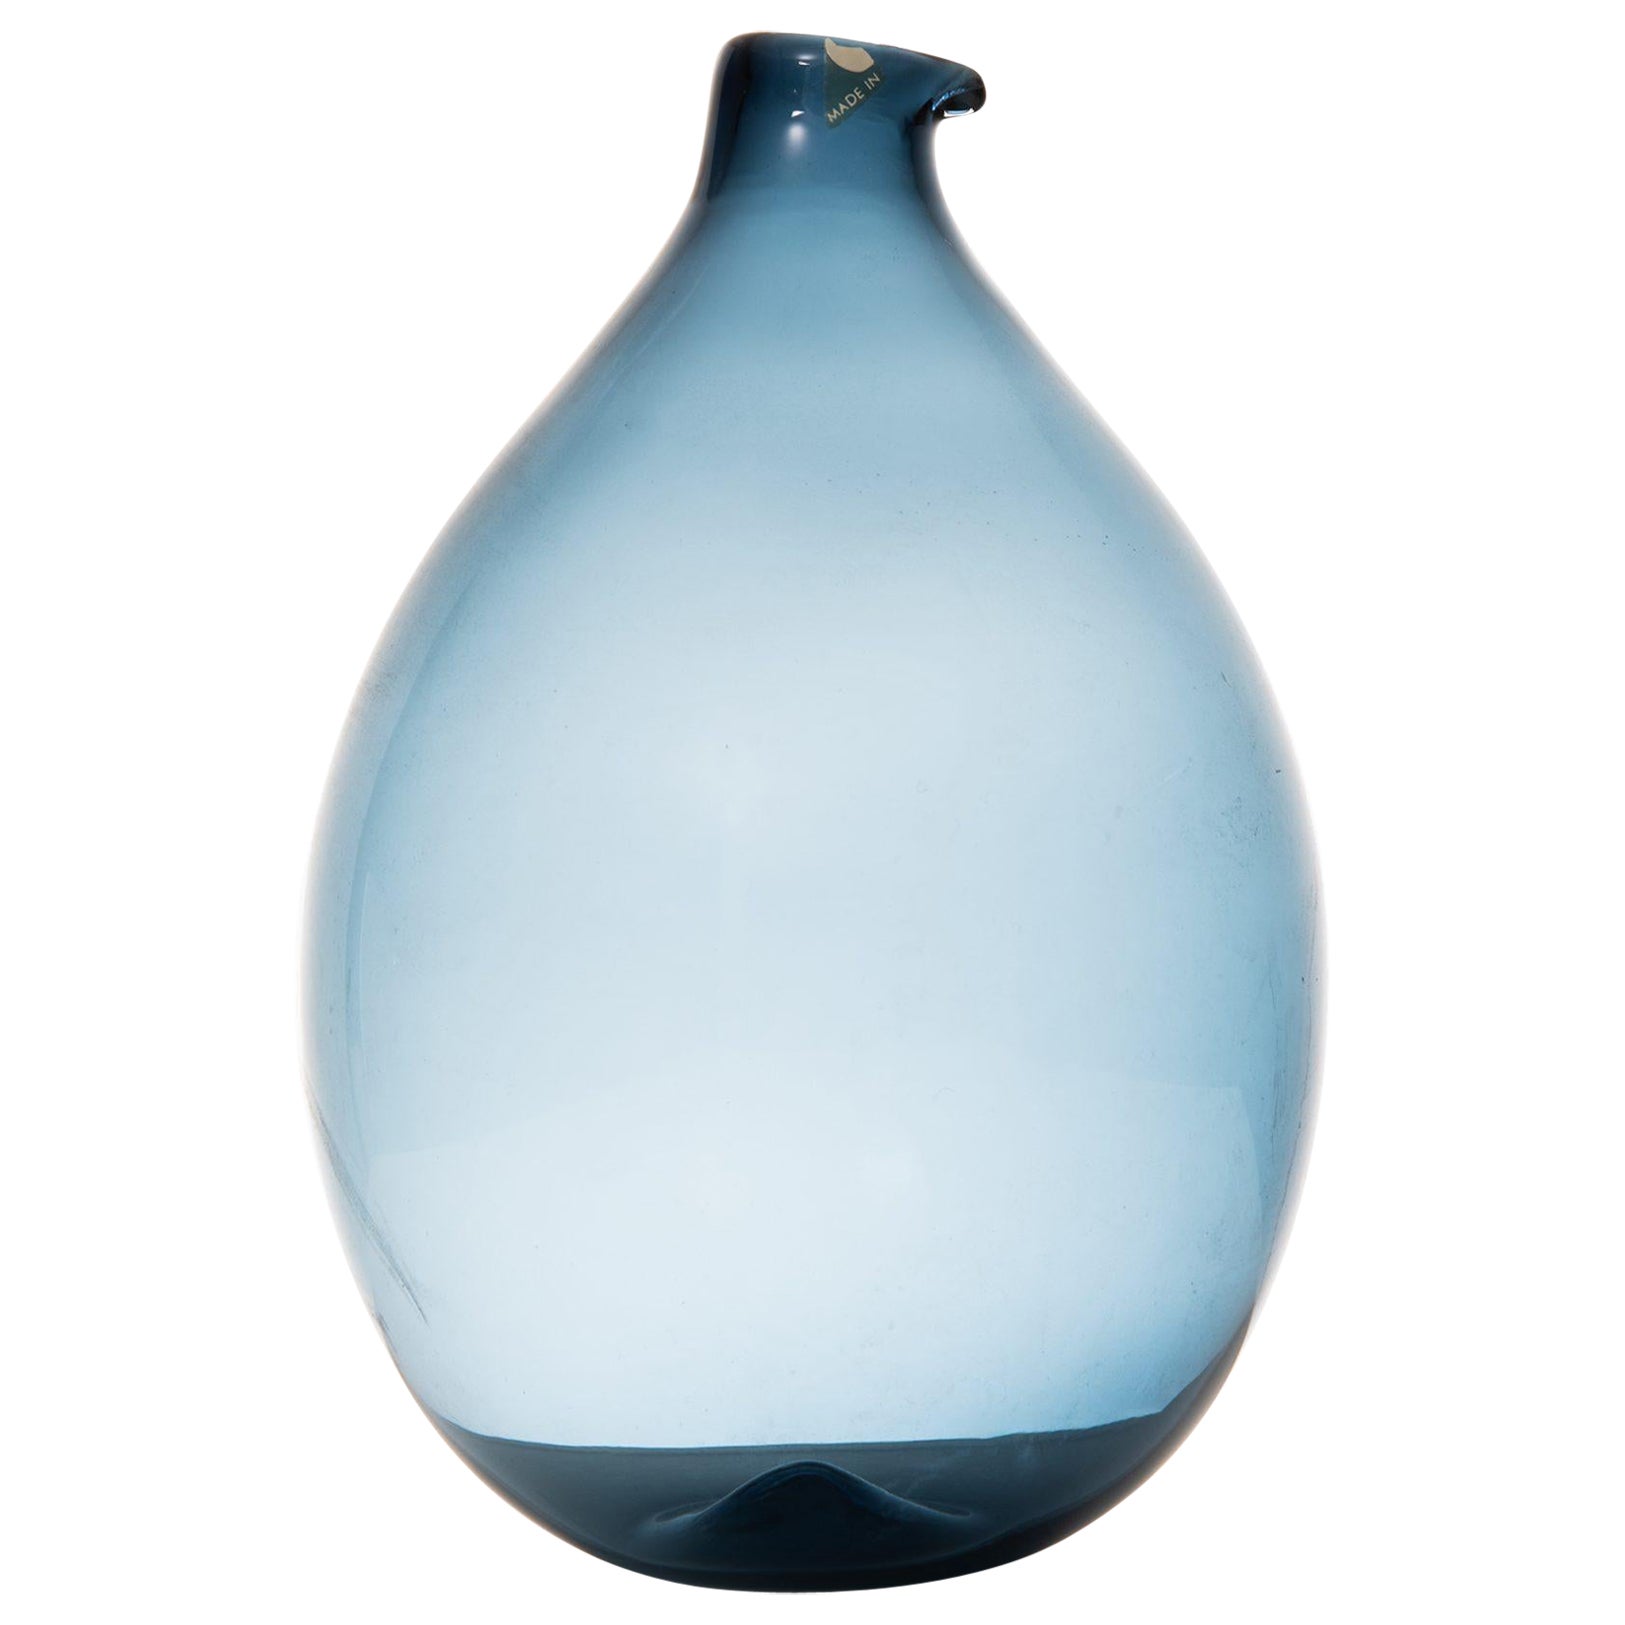 Timo Sarpaneva Bottle / Vase Model Pullo / Bird Vase by Iittala in Finland